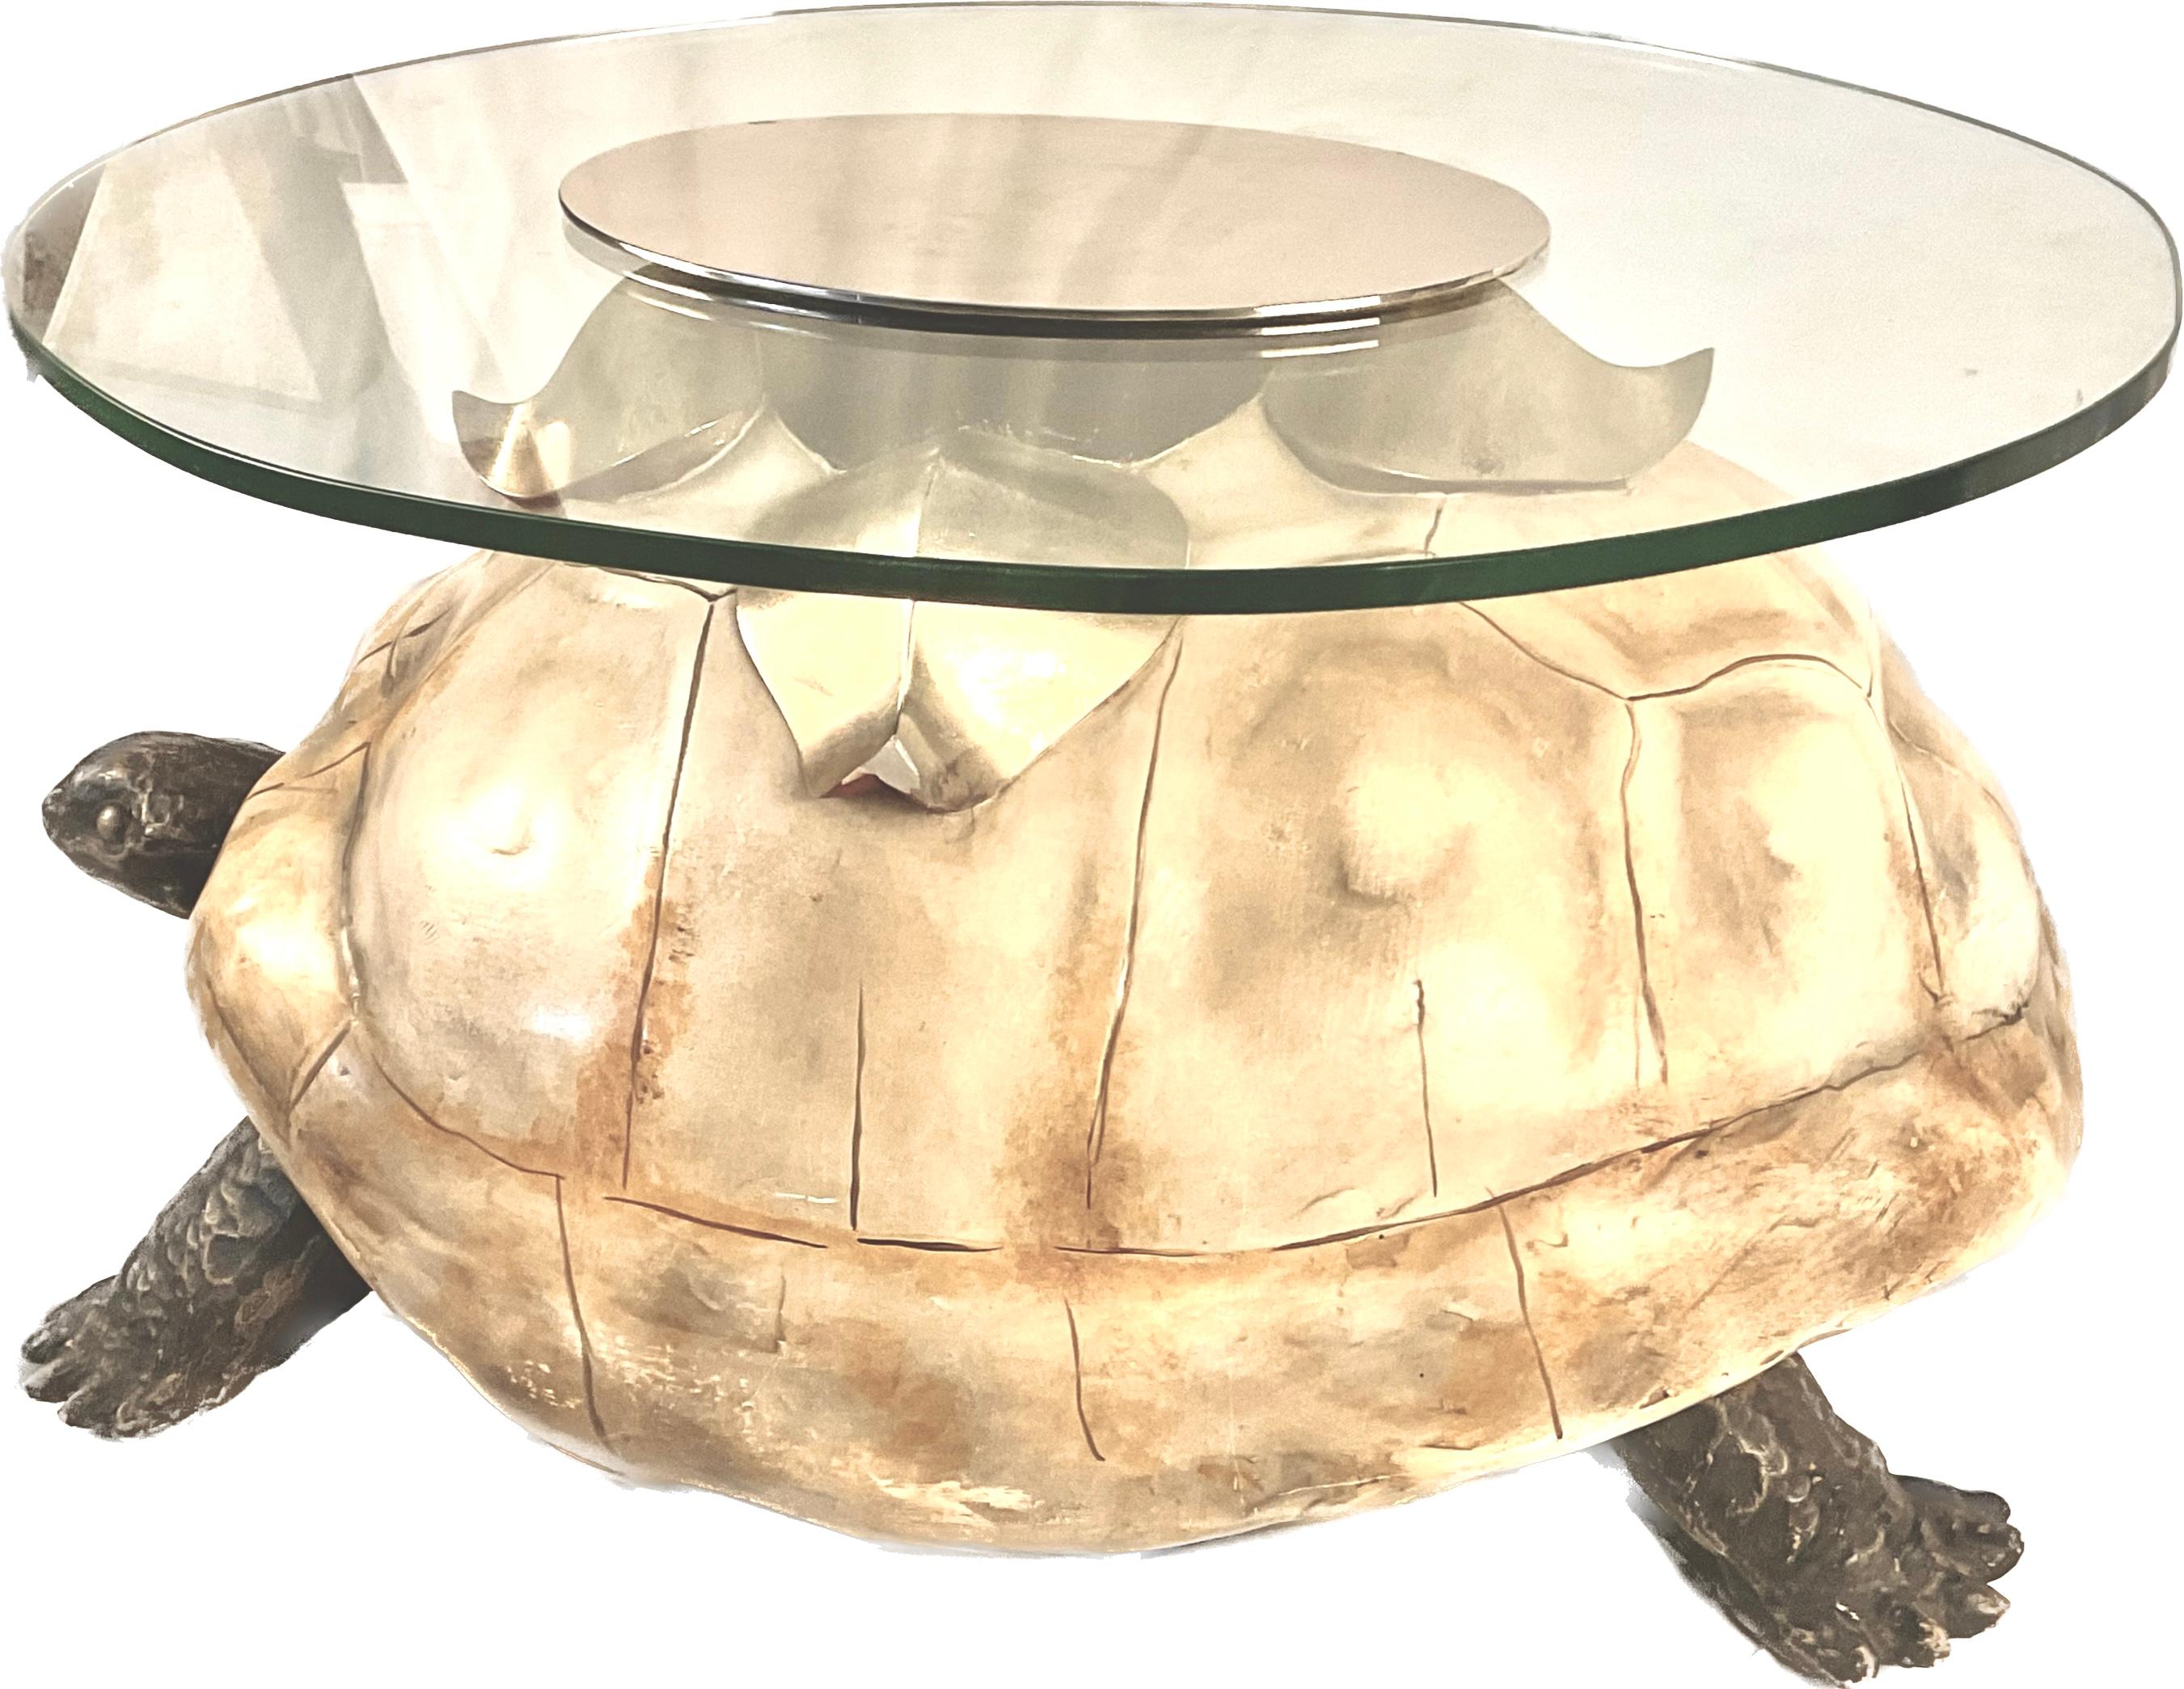 composition about tortoise